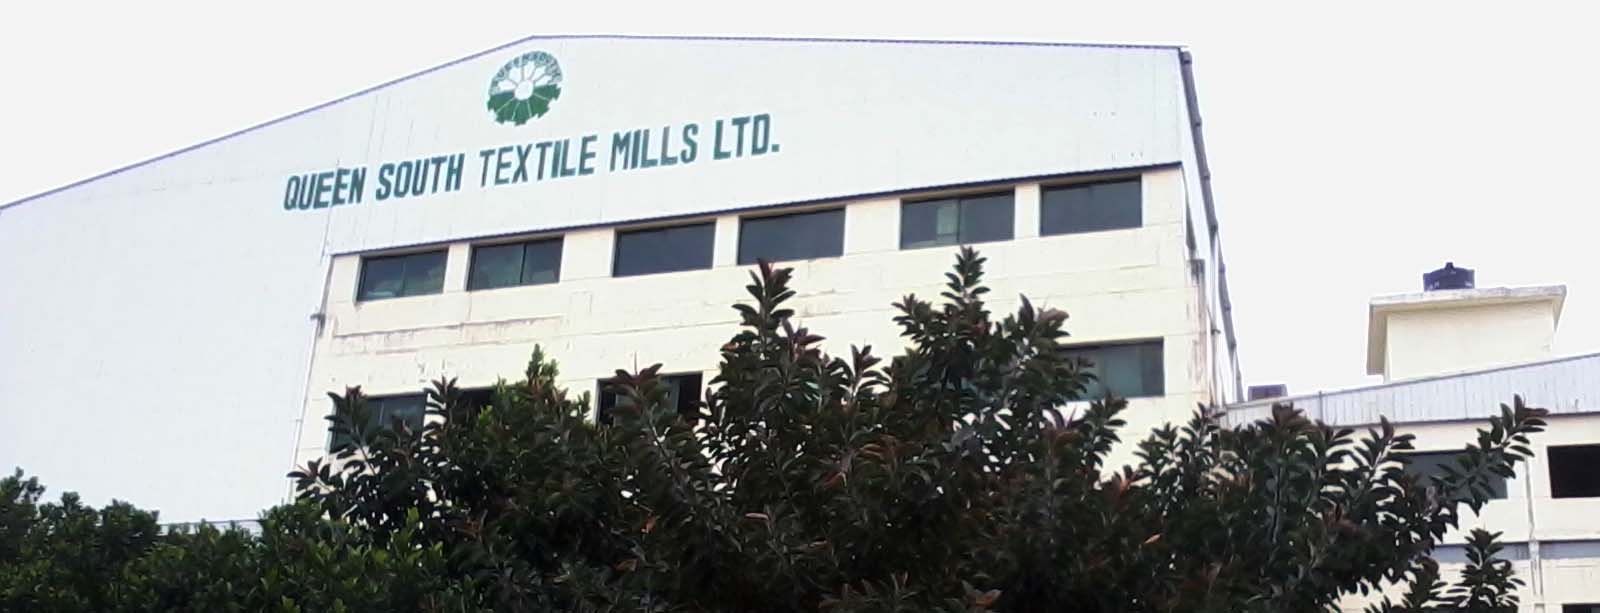 Queen South Textile Mills Ltd.